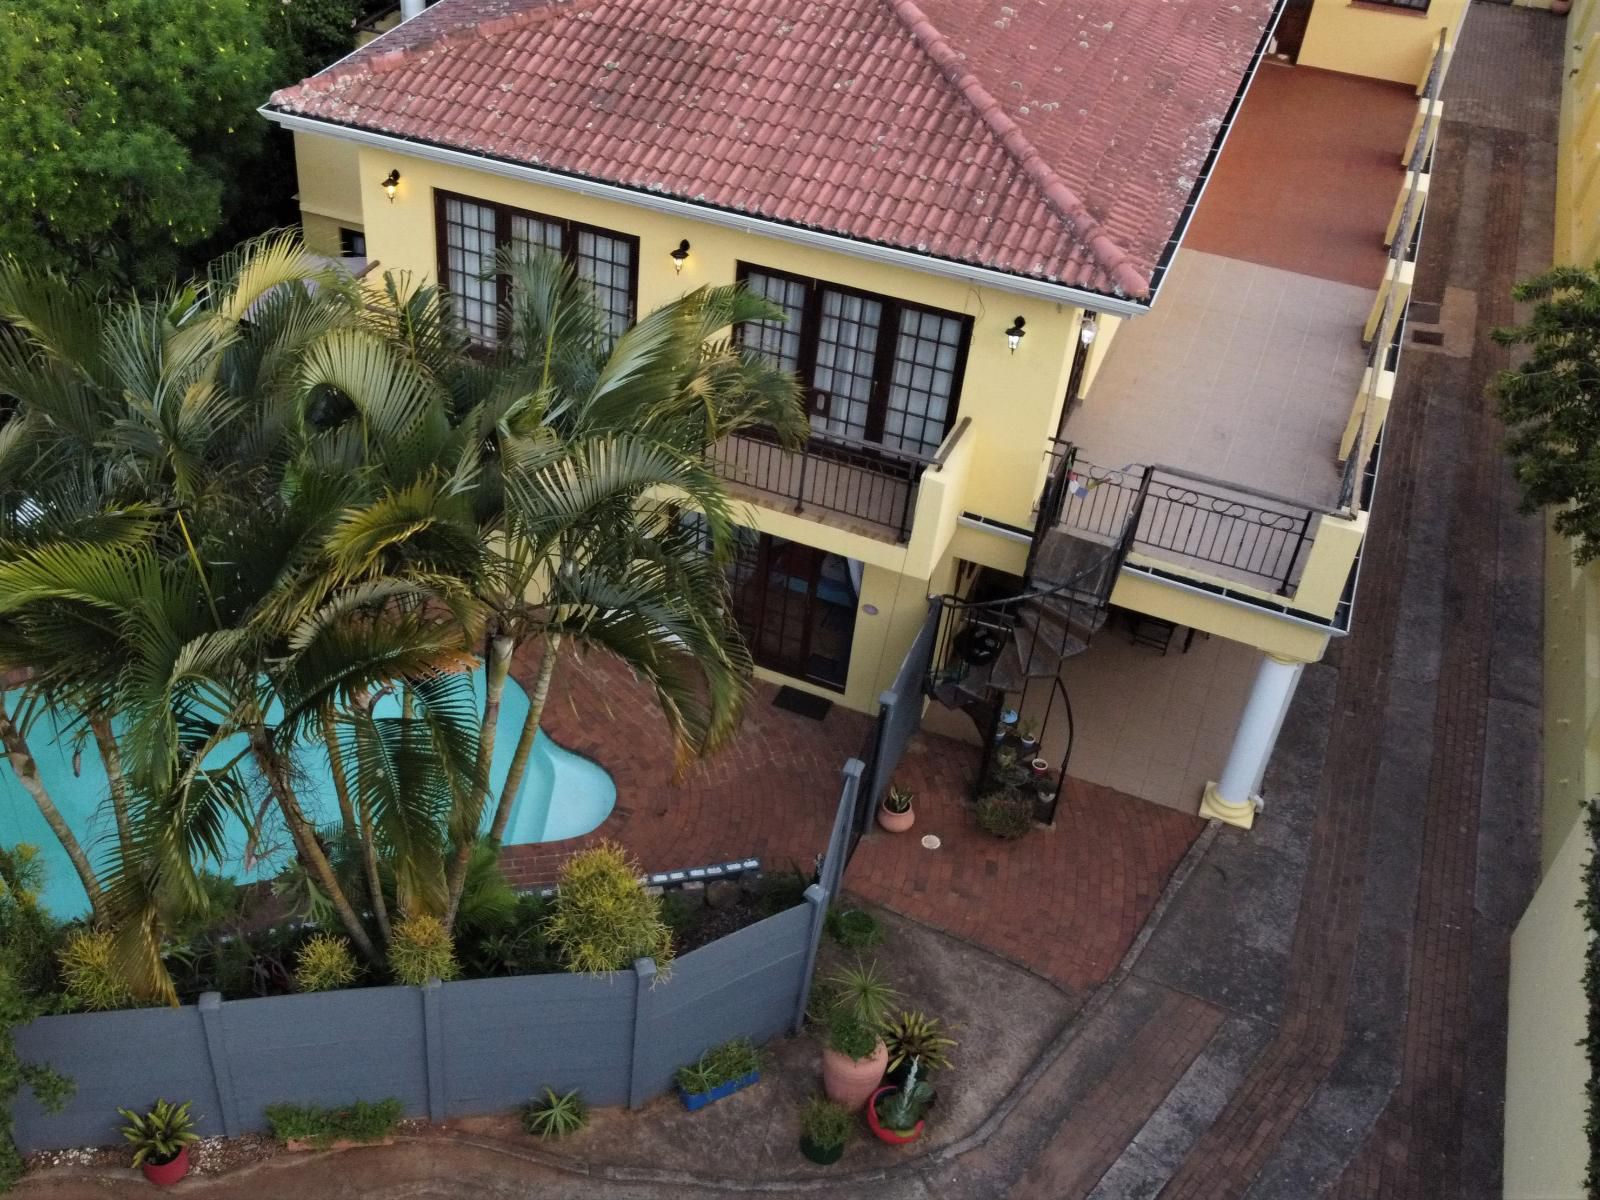 Tuksumduin Guesthouse Ballito Kwazulu Natal South Africa House, Building, Architecture, Palm Tree, Plant, Nature, Wood, Window